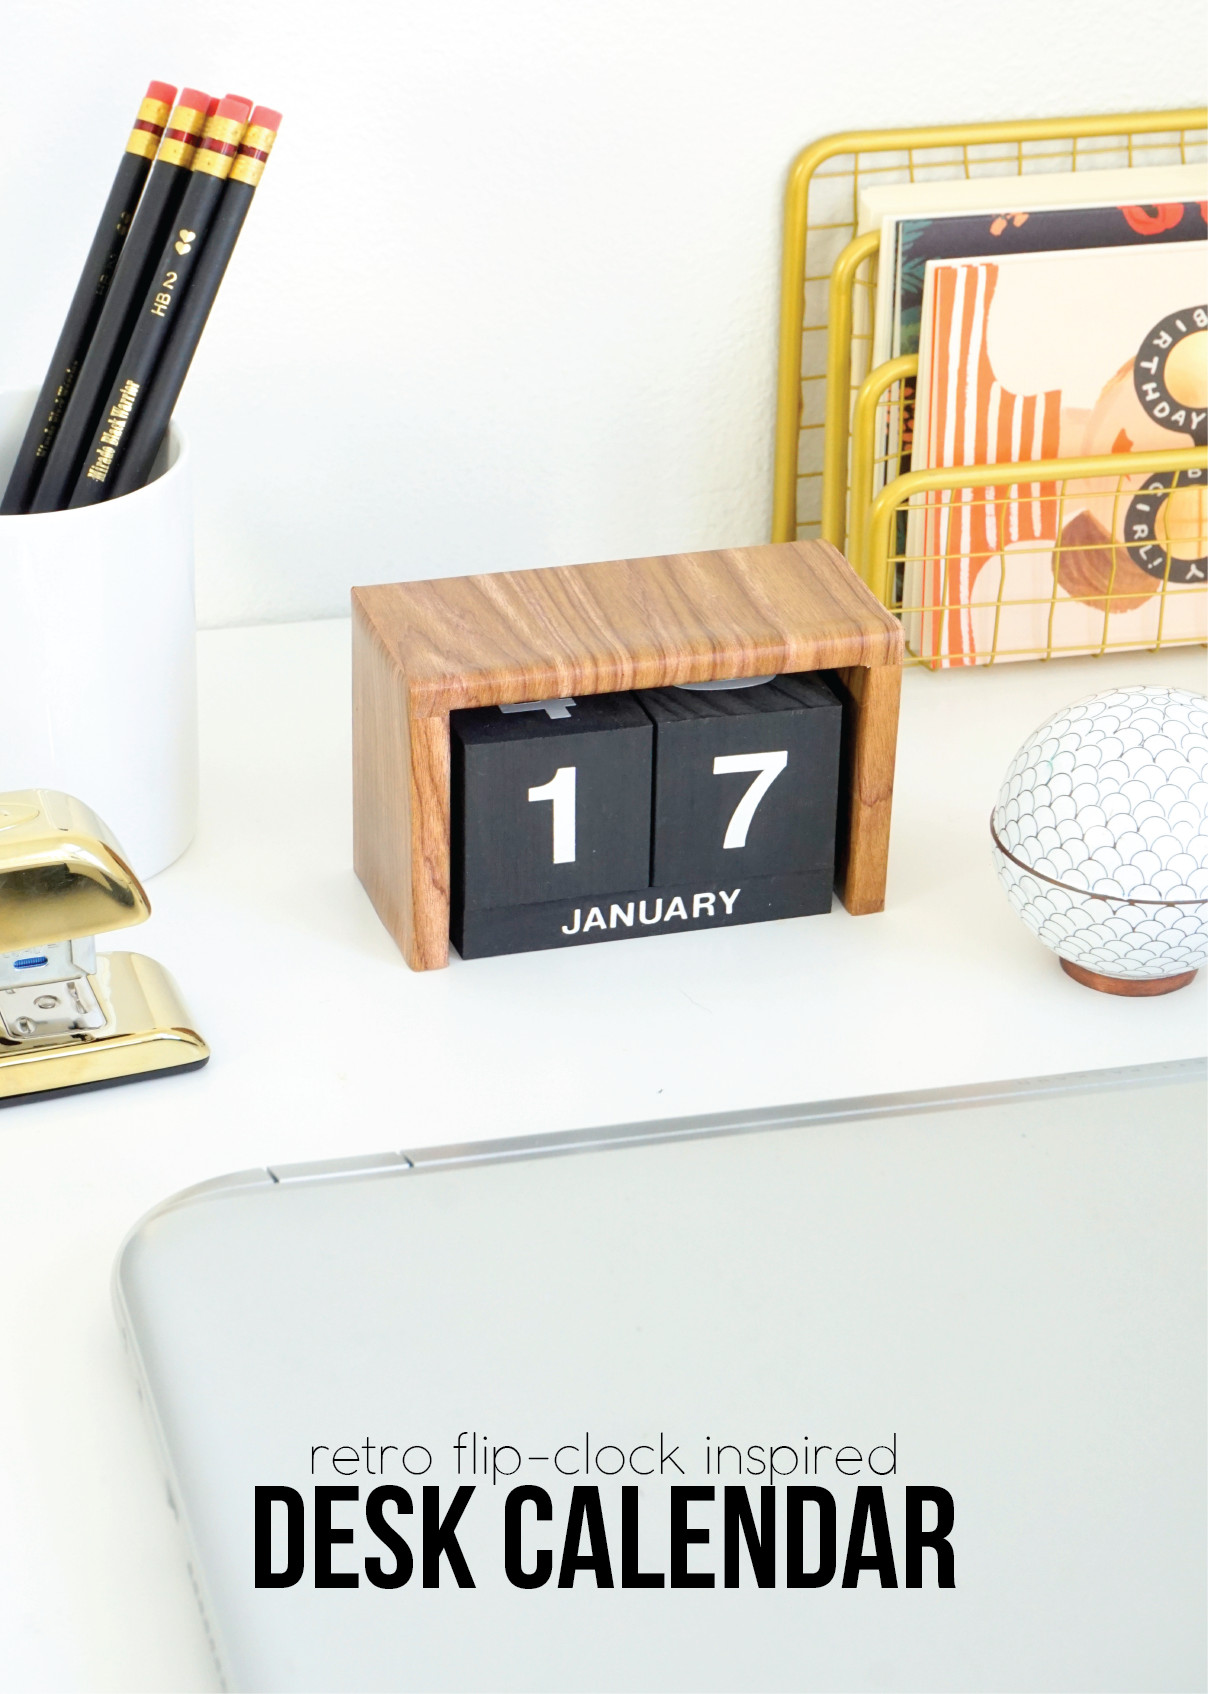 Best ideas about DIY Desk Calendar
. Save or Pin Flip Clock Inspired Desk Calendar Now.